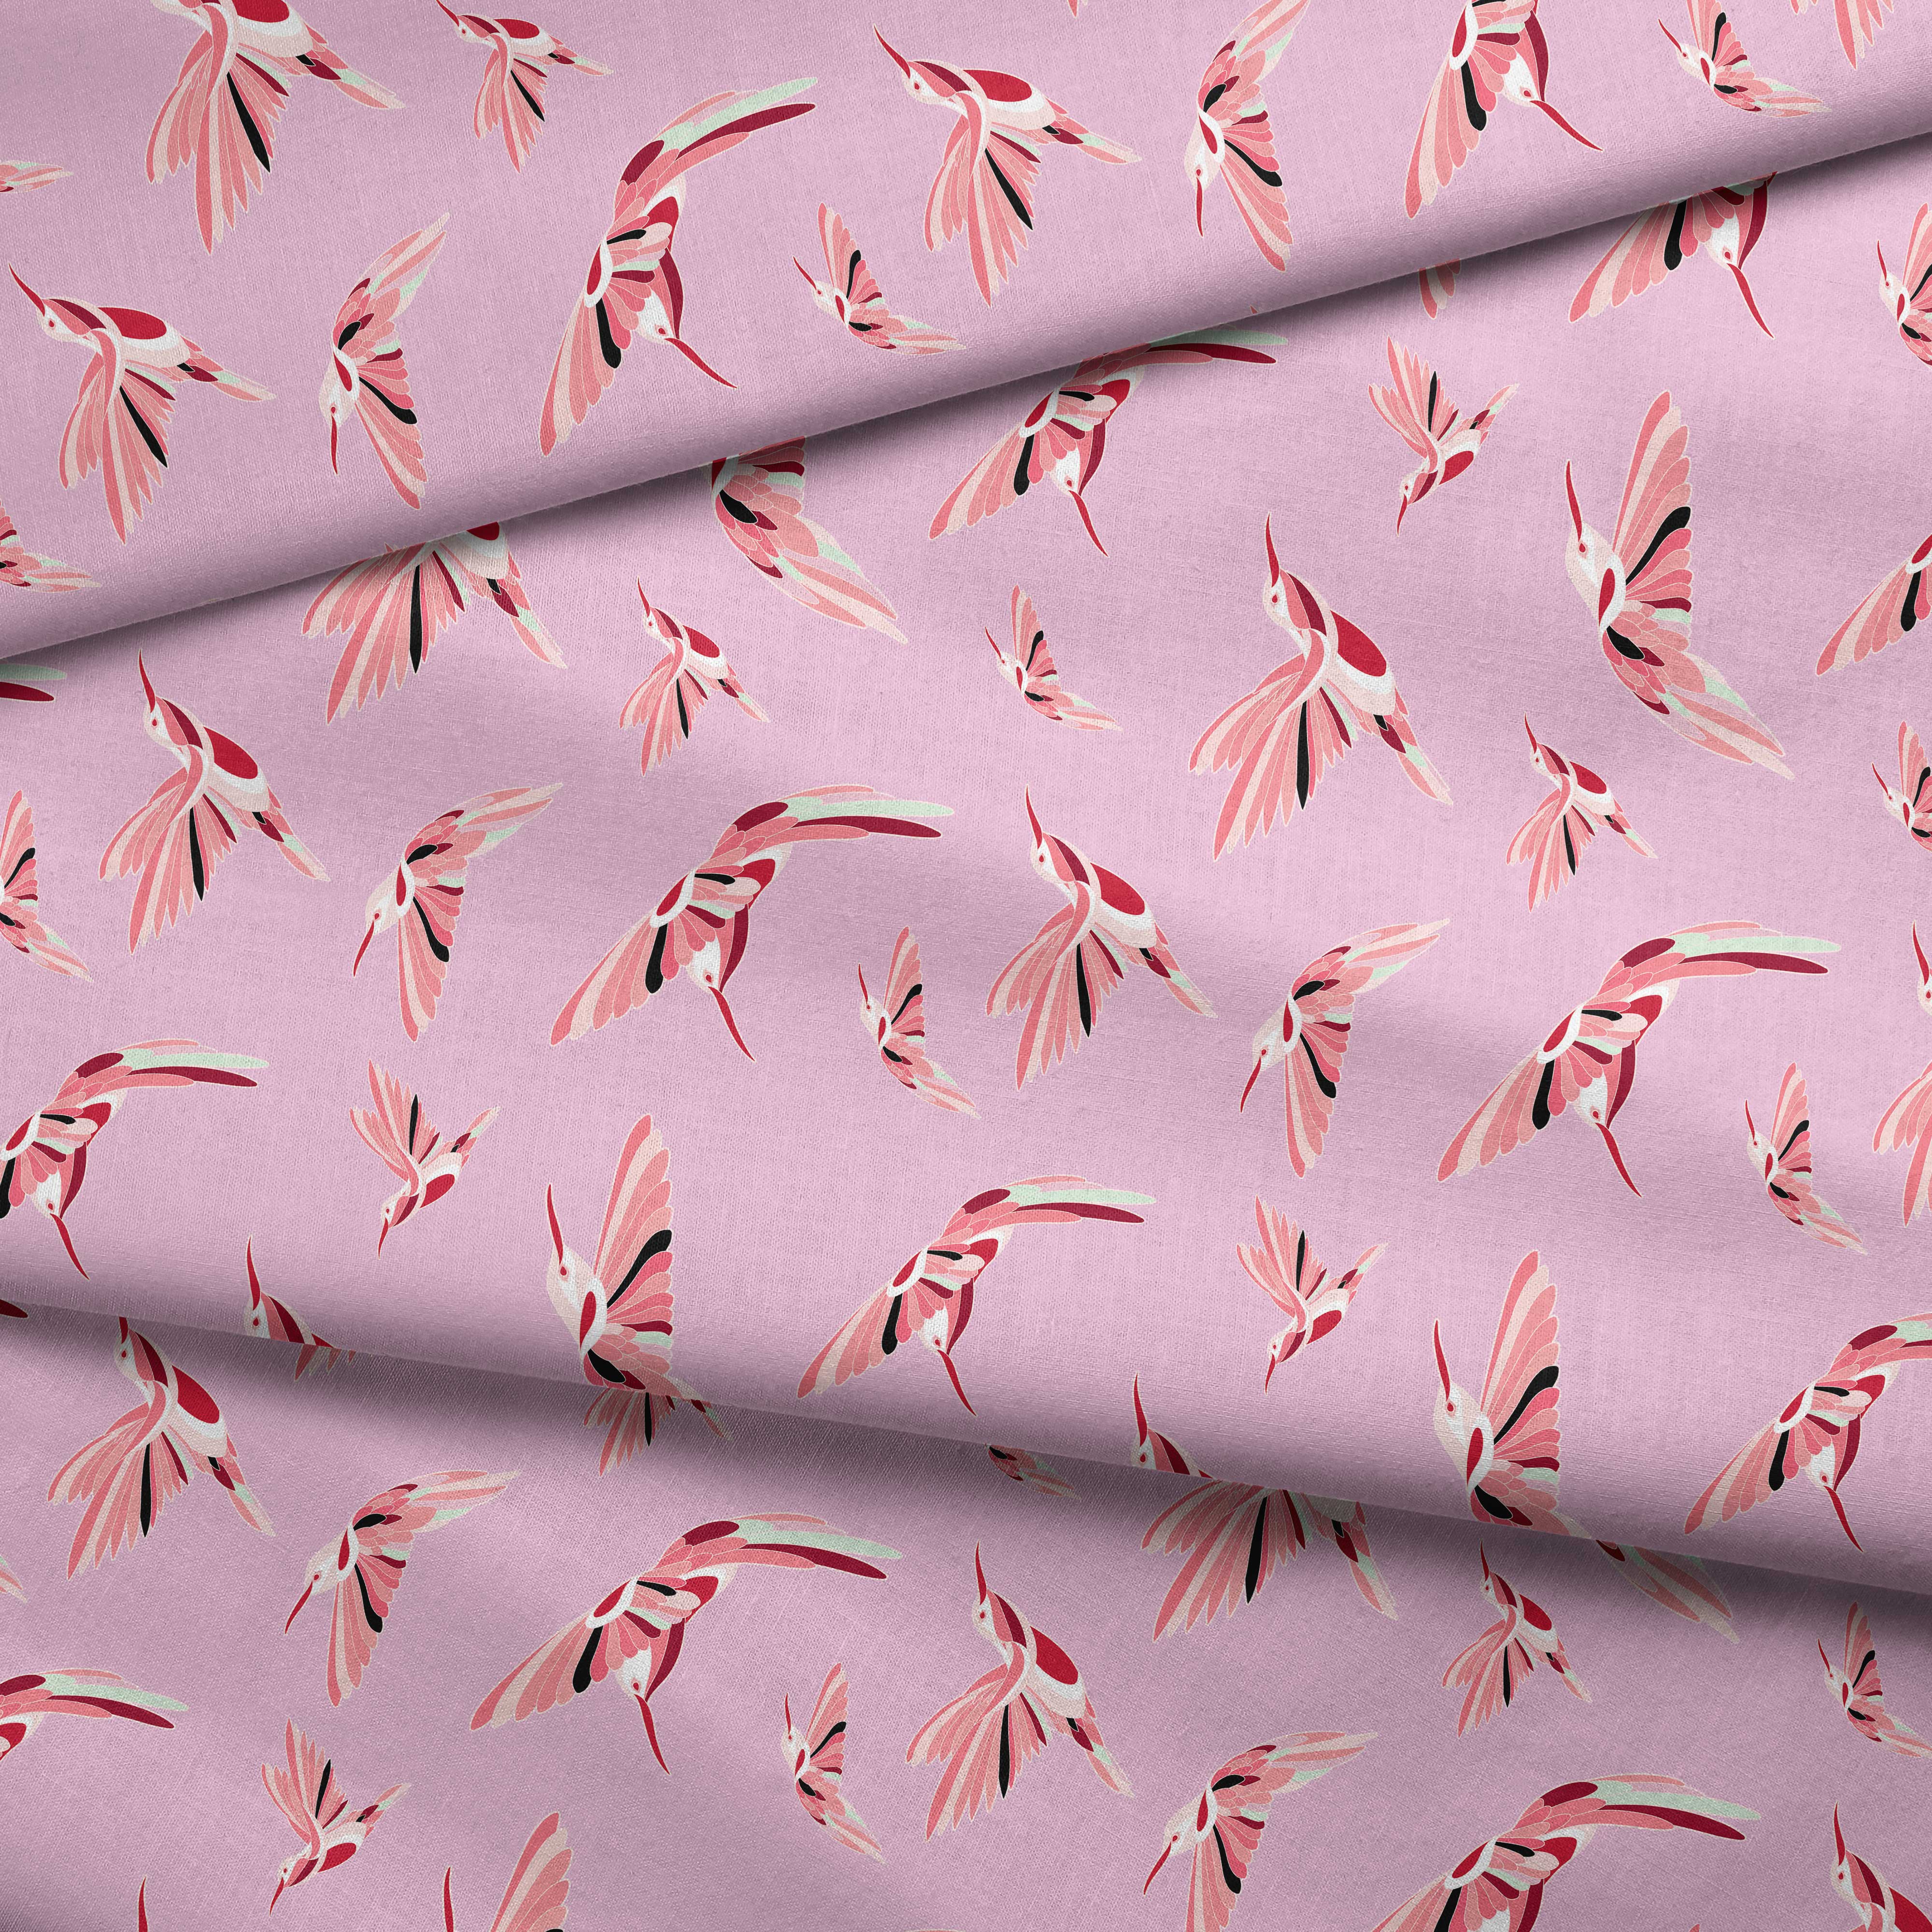 Strawberry Pink Cotton Poplin Fabric By the Yard Fabric NBprintex 